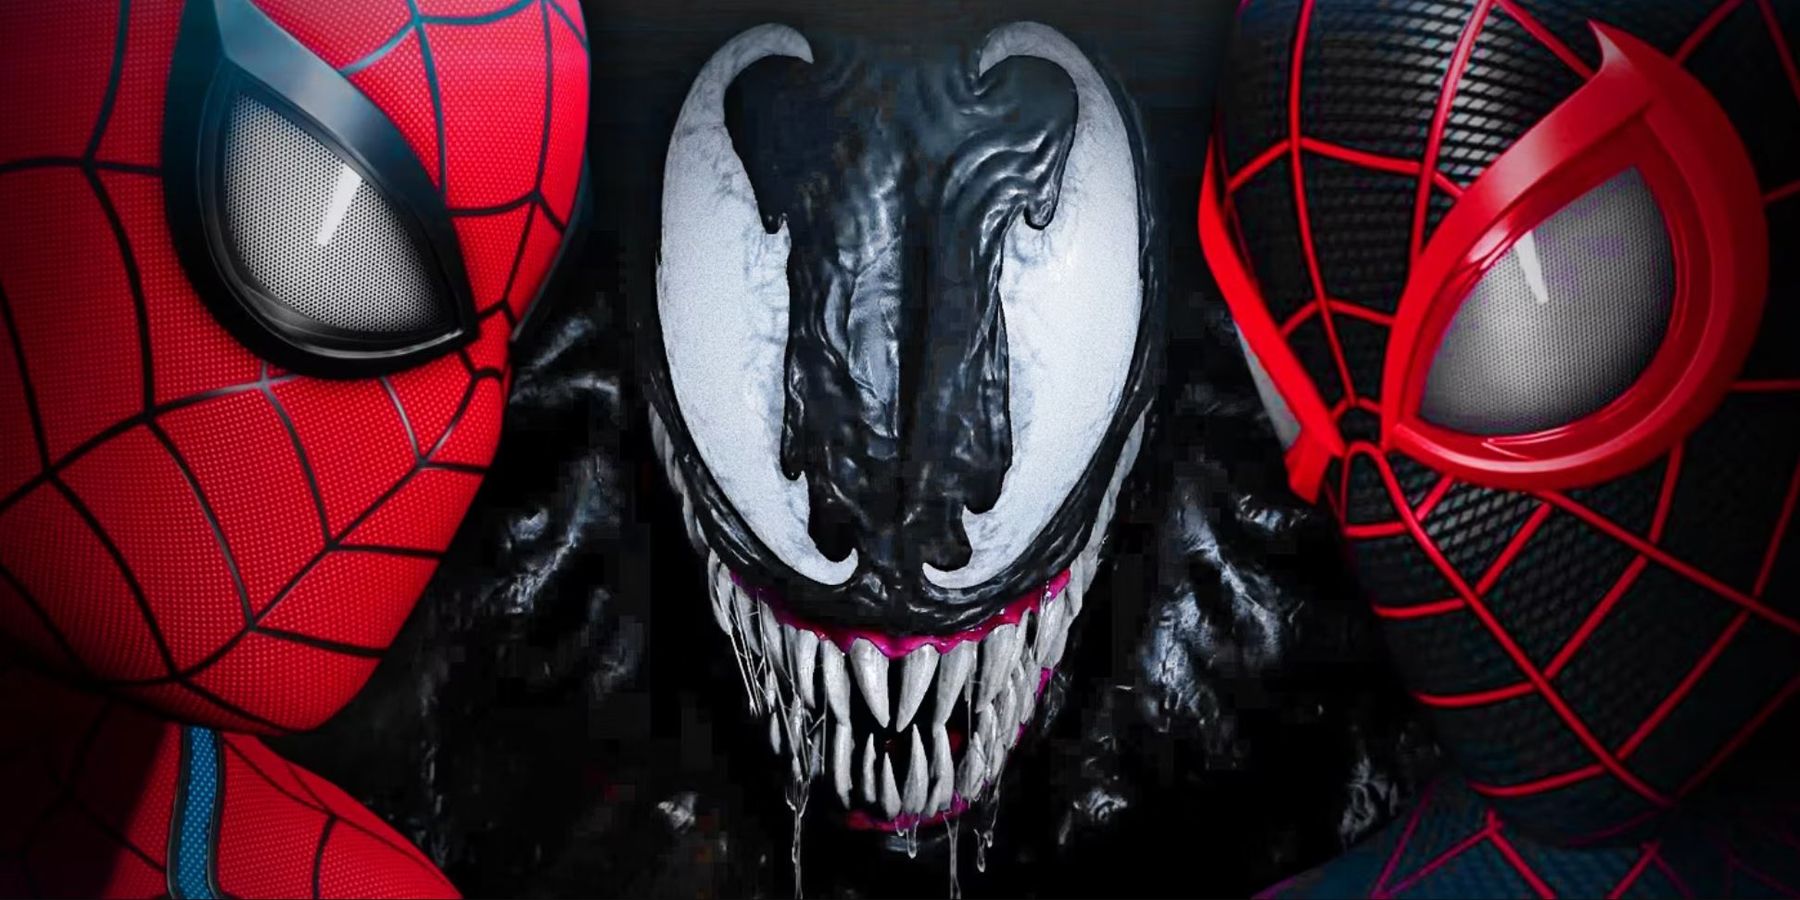 Marvel's Spider-Man 2 release date leaked by Venom voice actor